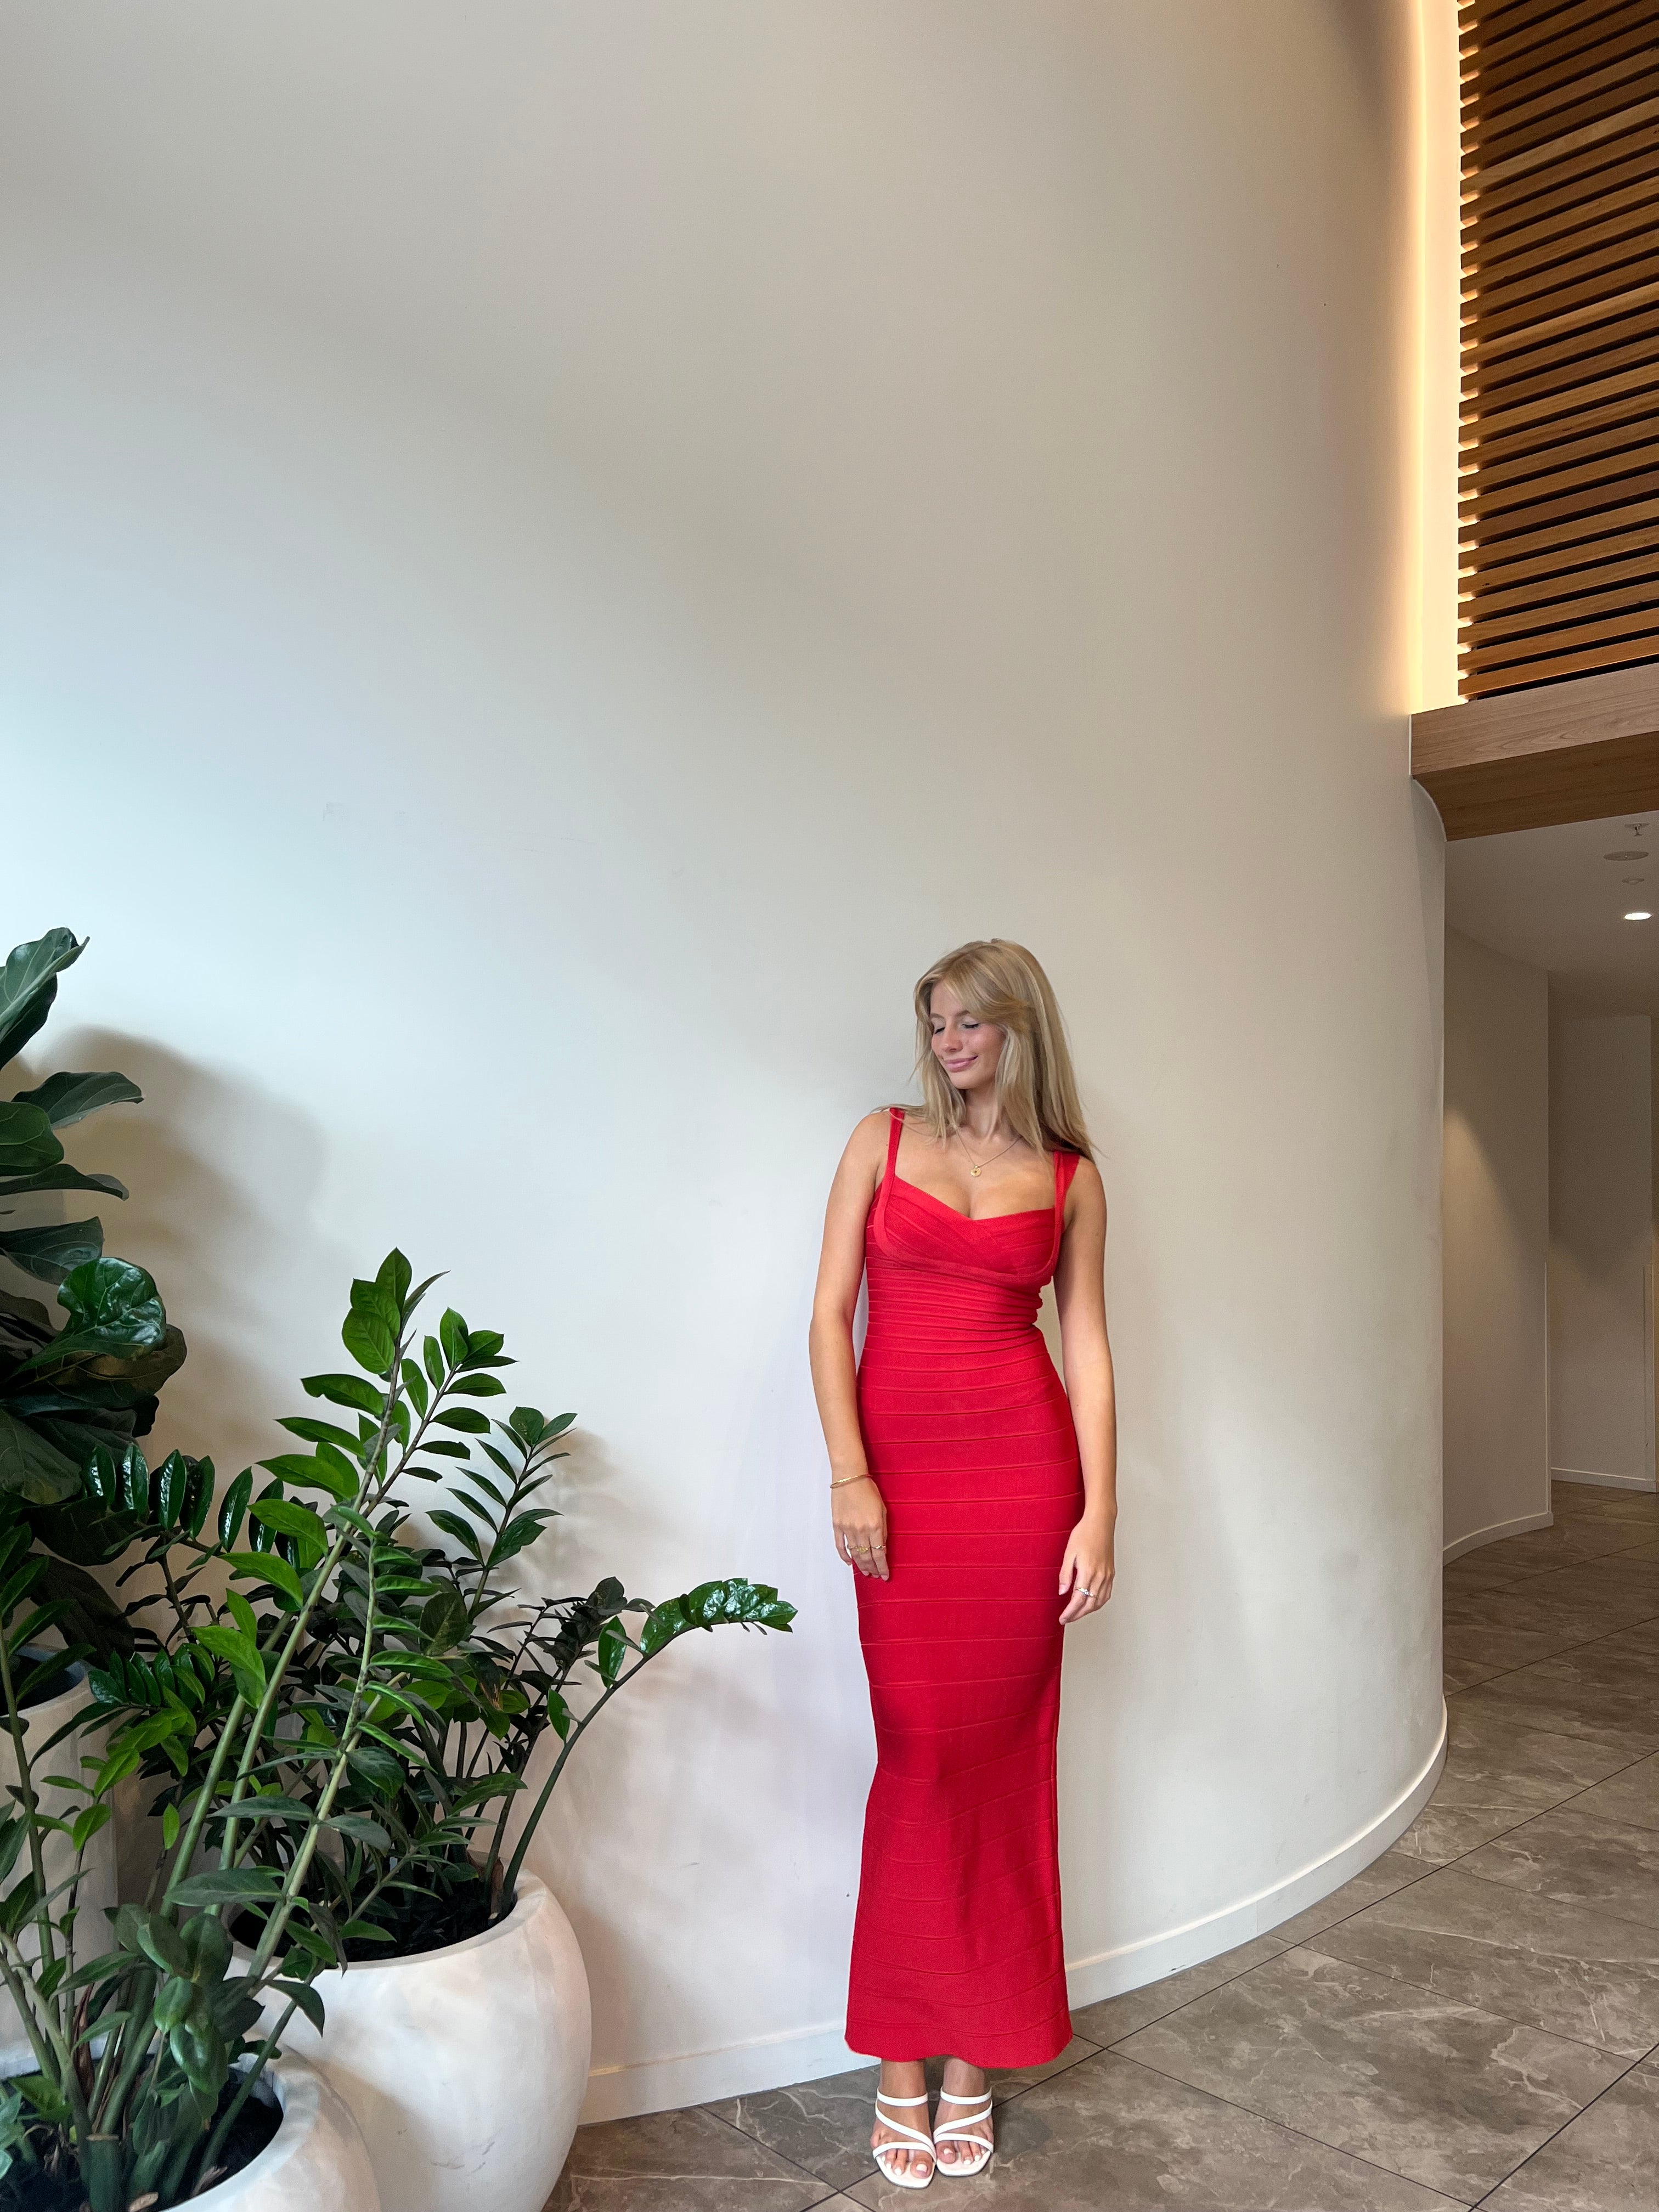 Candice Swanepoel Red Dress - Stunning Fashion Inspiration